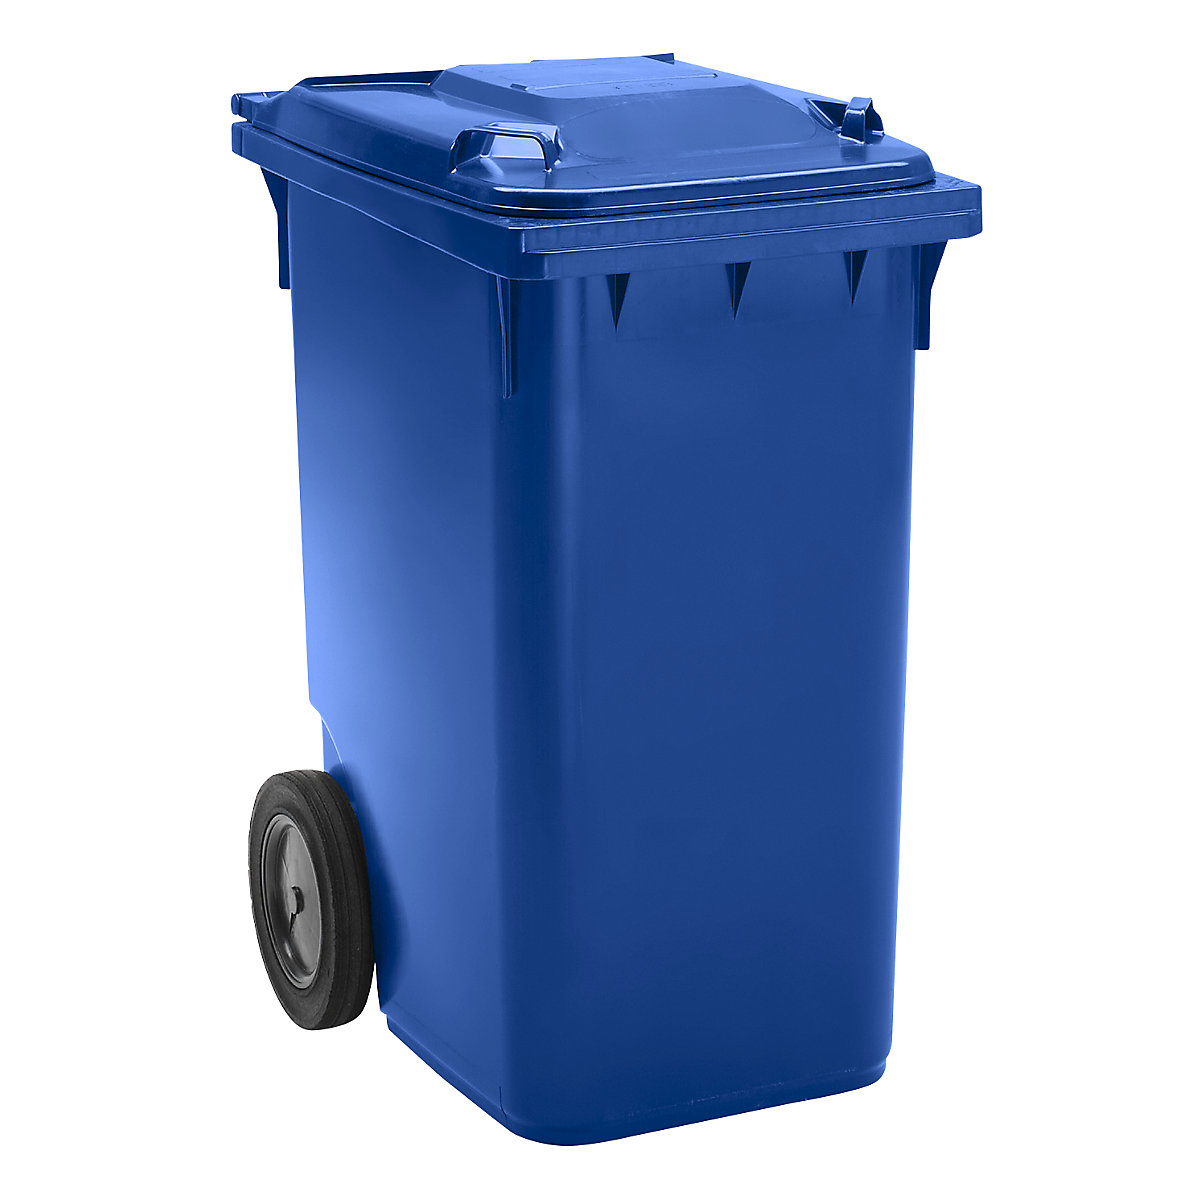 Bidone per rifiuti in plastica DIN EN 840, capacità 360 l, alt. x largh. x prof. 665 x 1115 x 880 mm, Ø ruota 300 mm, blu-5